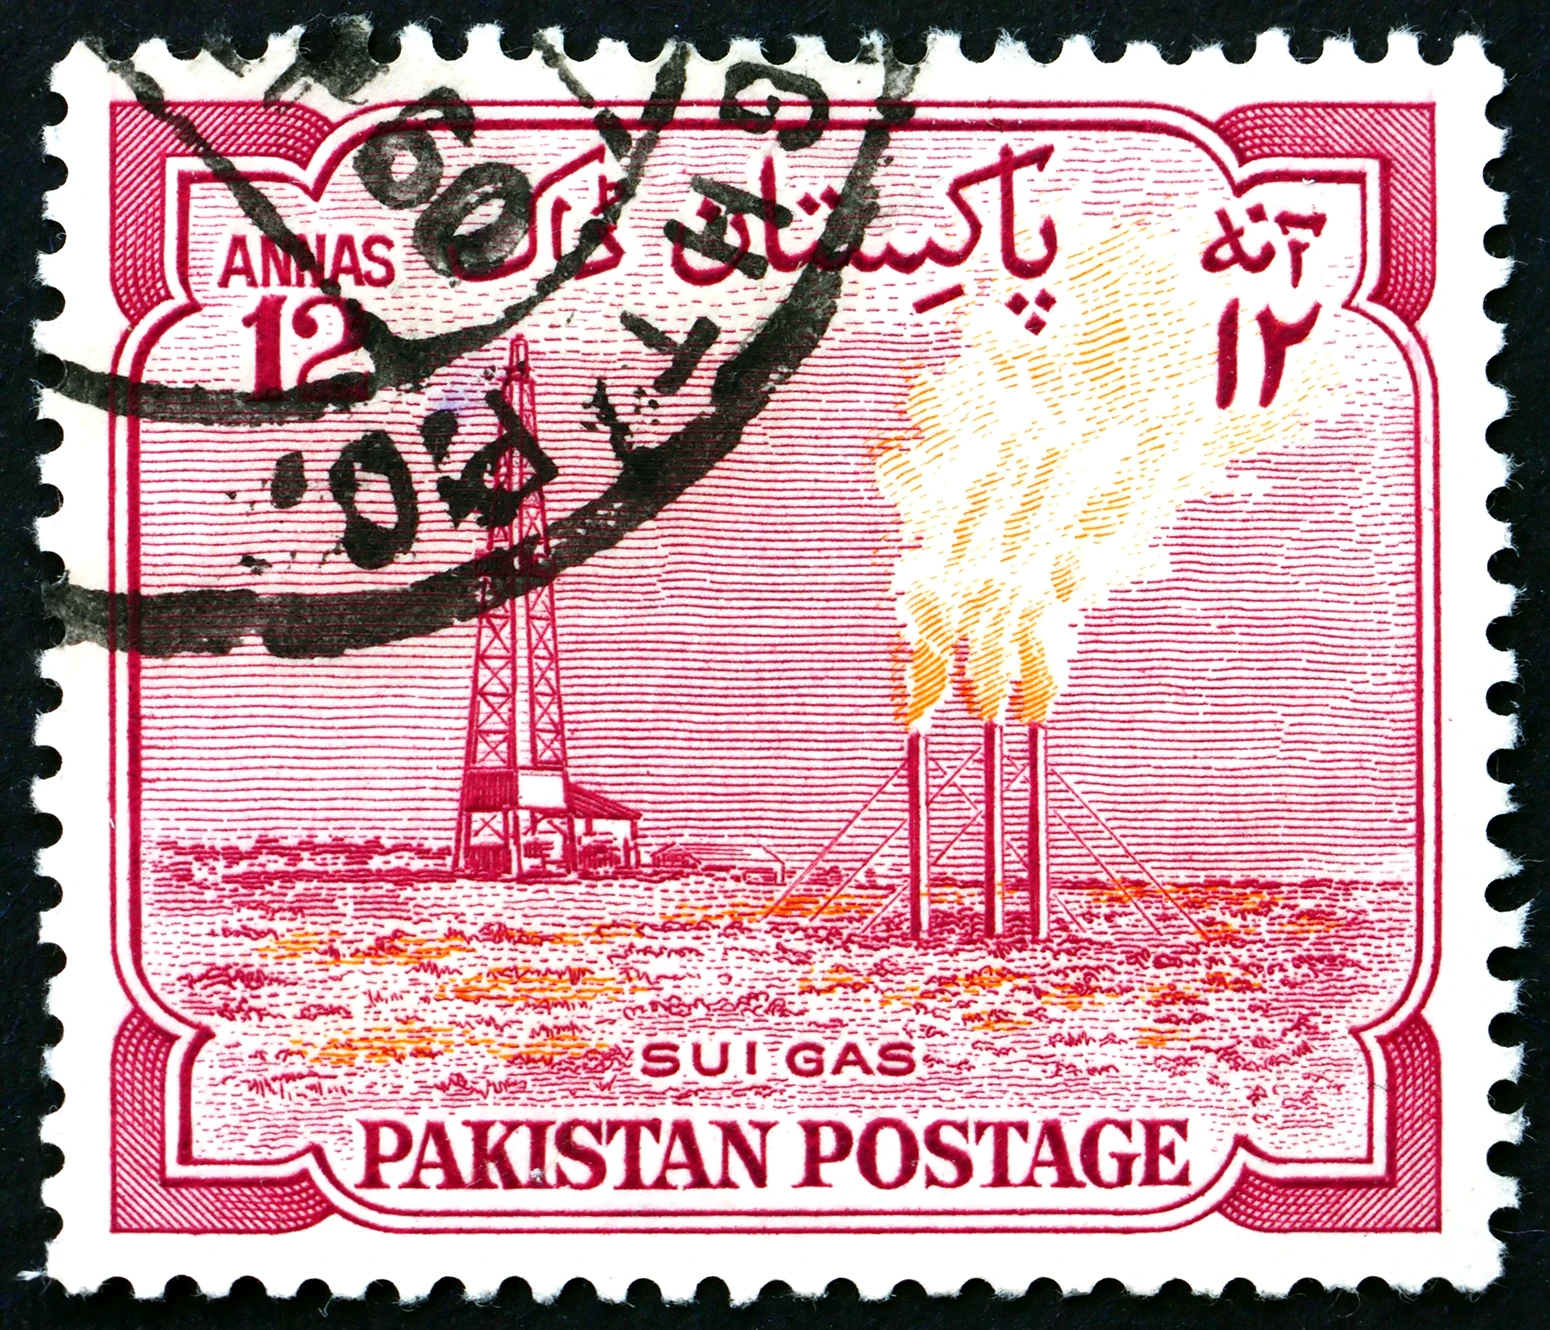 Pakistanska znamka, ki prikazuje plinarno Sui, okoli leta 1955.